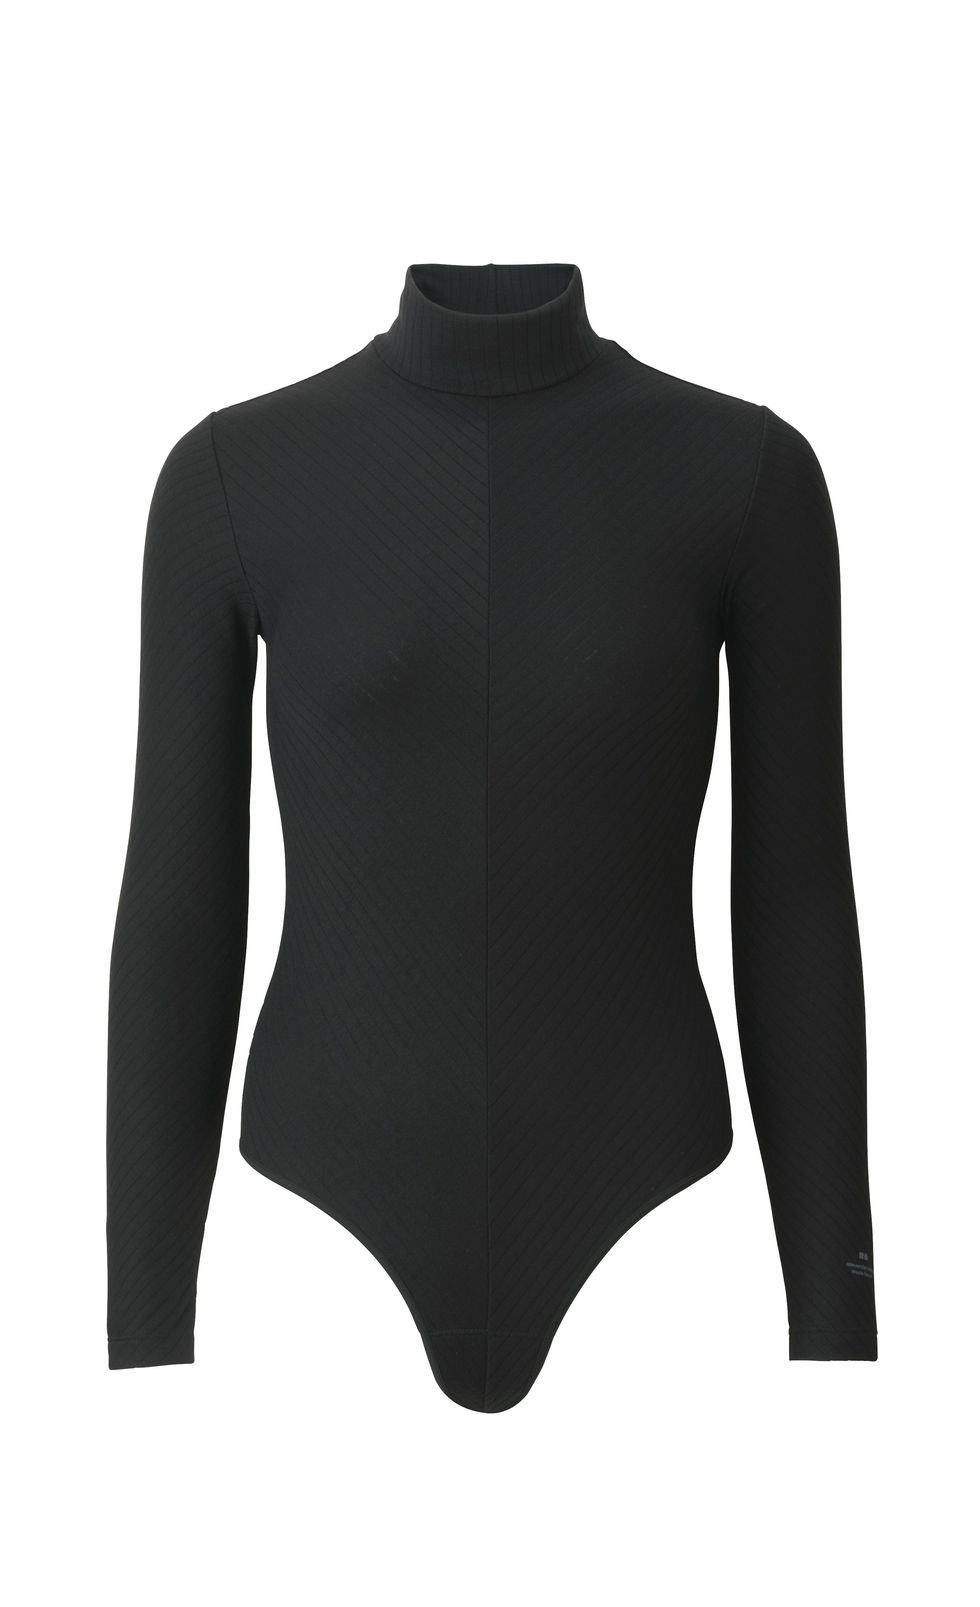 Uniqlo x Alexander Wang + Heattech Ribbed Sleeveless Bodysuit